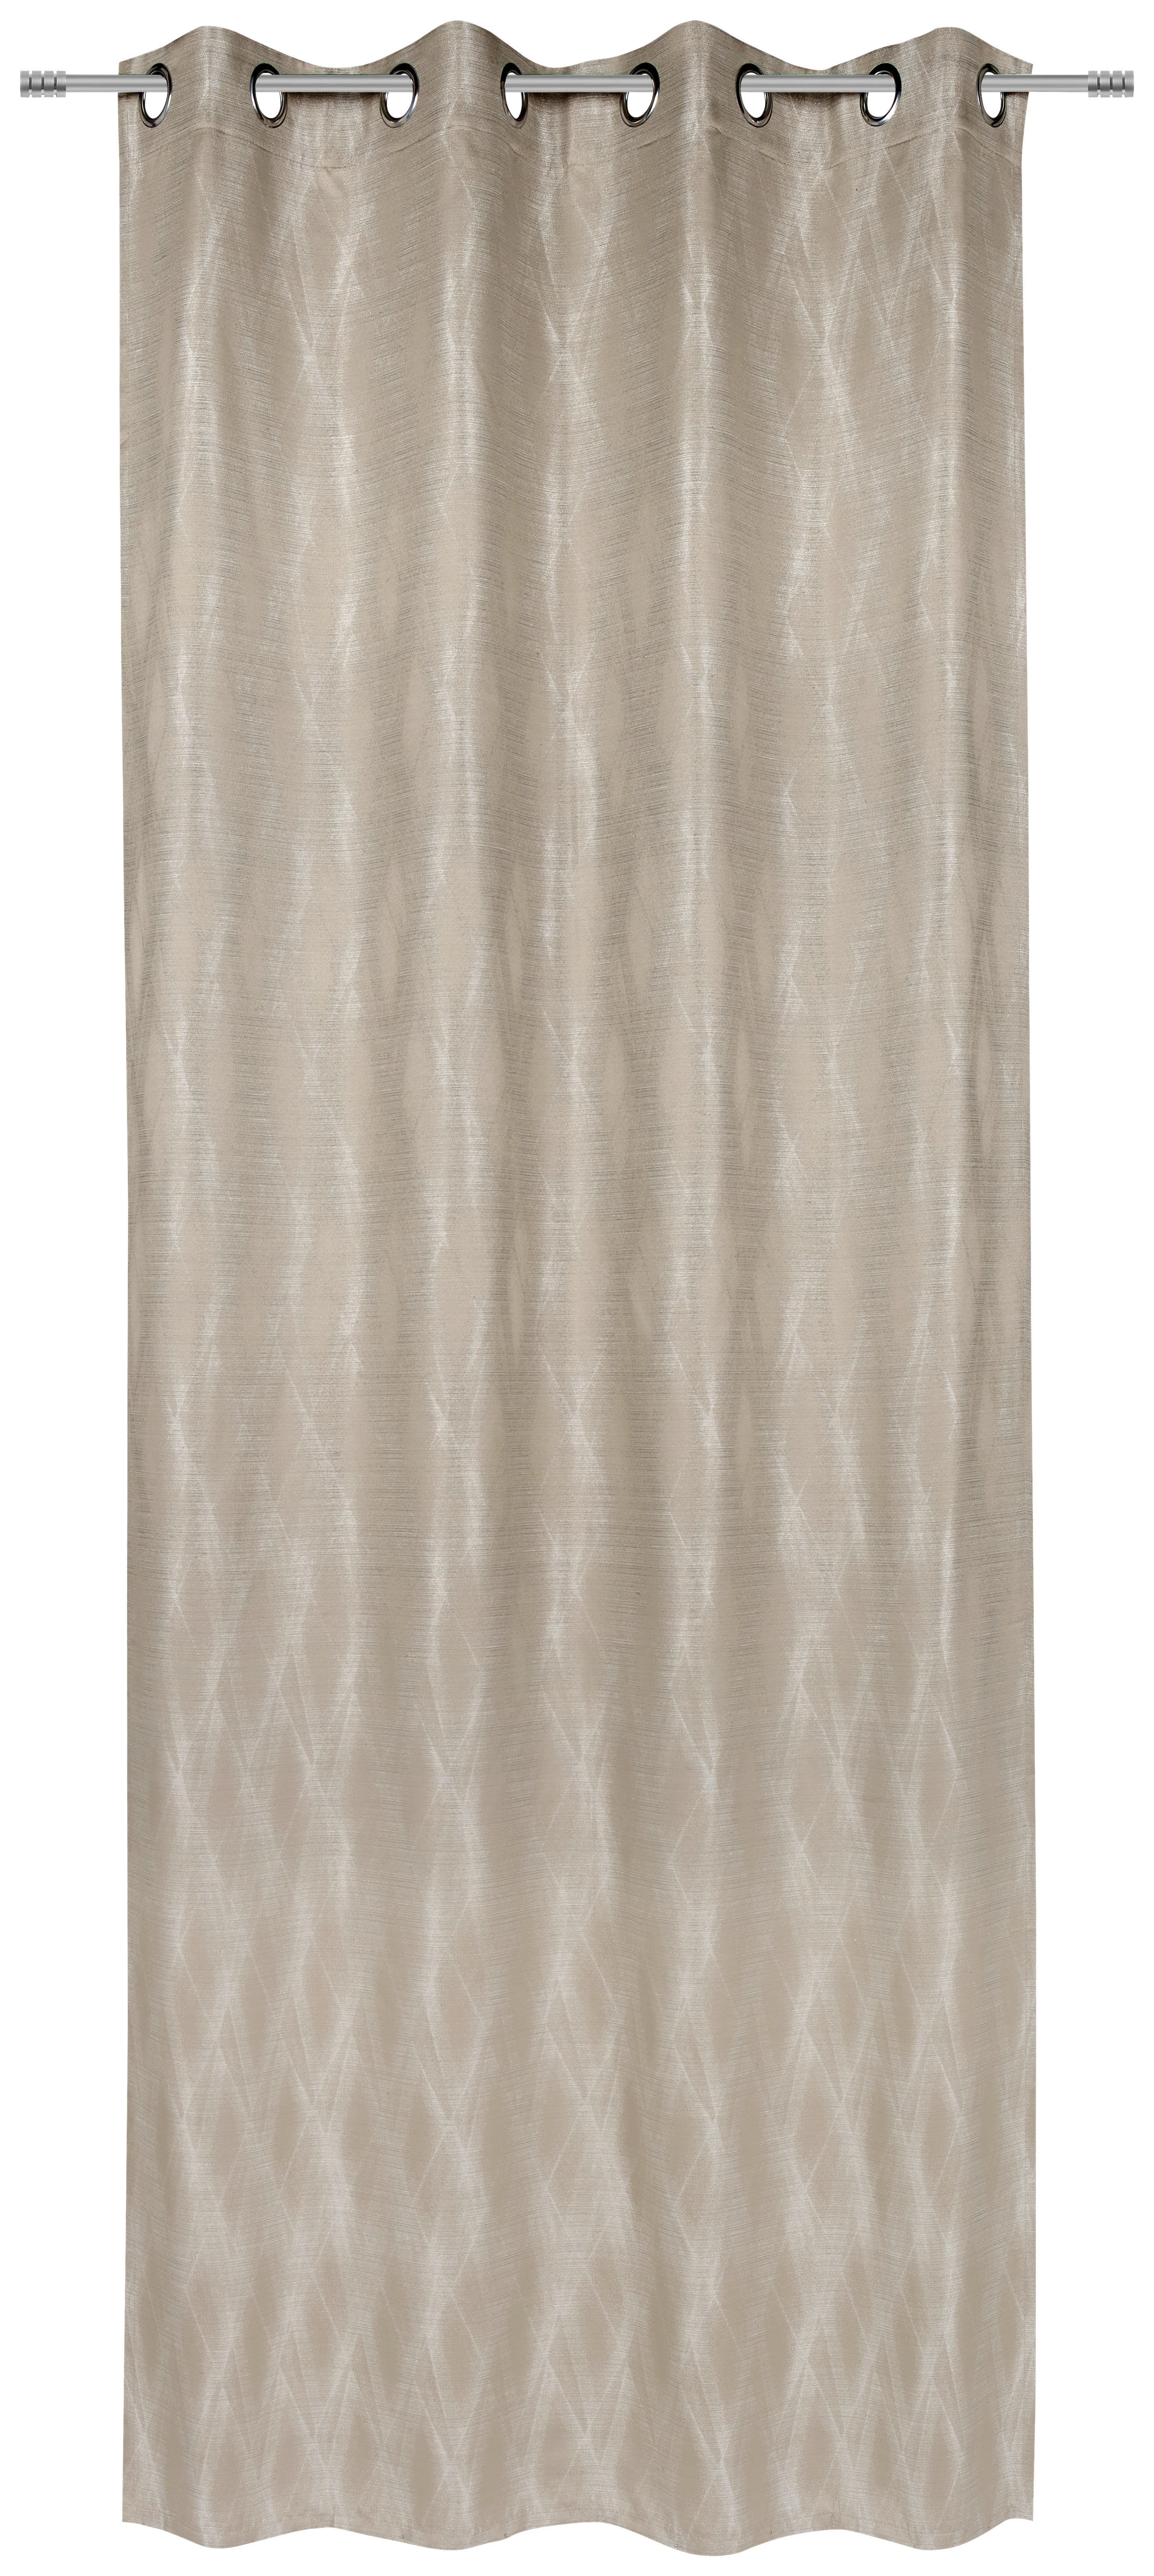 ÖSENSCHAL Narvik blickdicht 135/250 cm   - Sandfarben/Beige, Design, Textil (135/250cm) - Ambiente